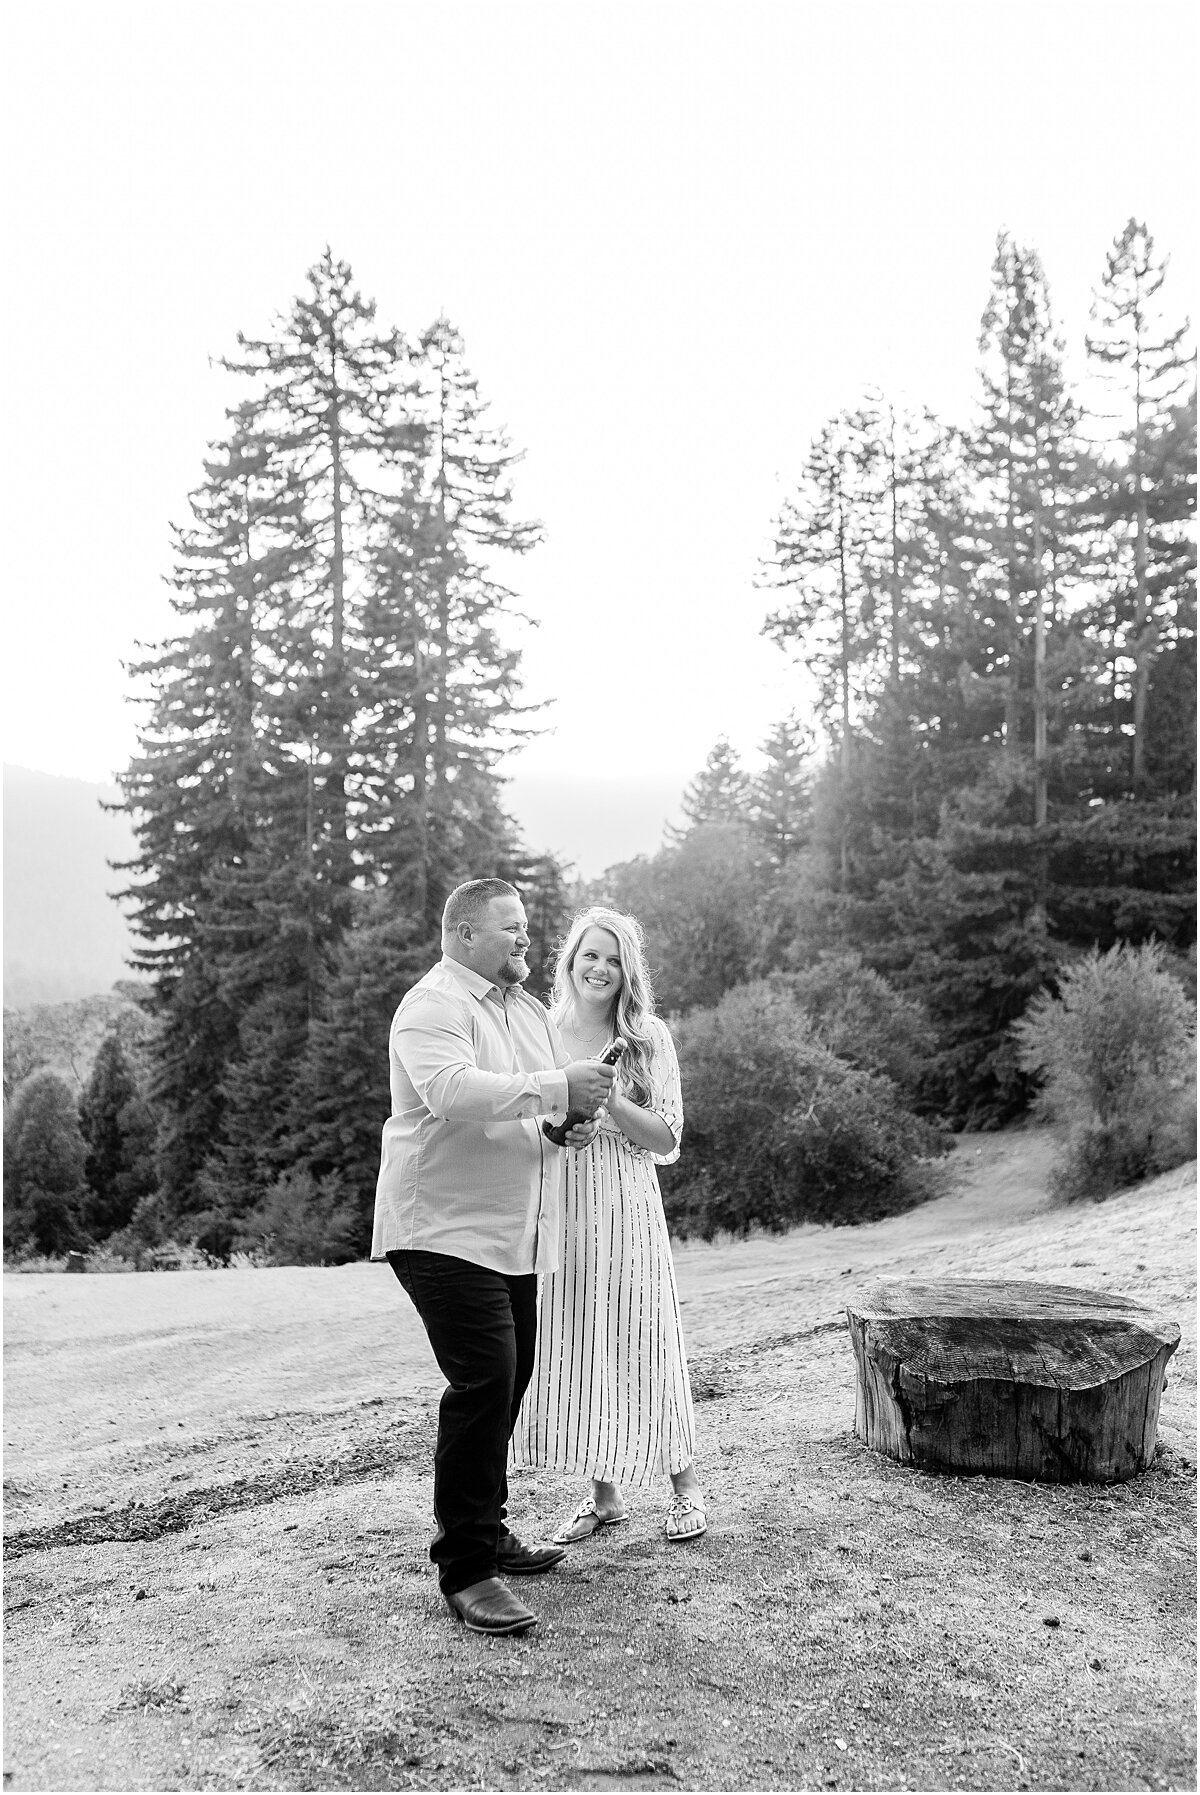 1985lukephotography.com | 1985 Luke Photography Bay Area San Francisco Northern California Wedding Engagement Photographers | Boulder Creek Engagements 46.jpg